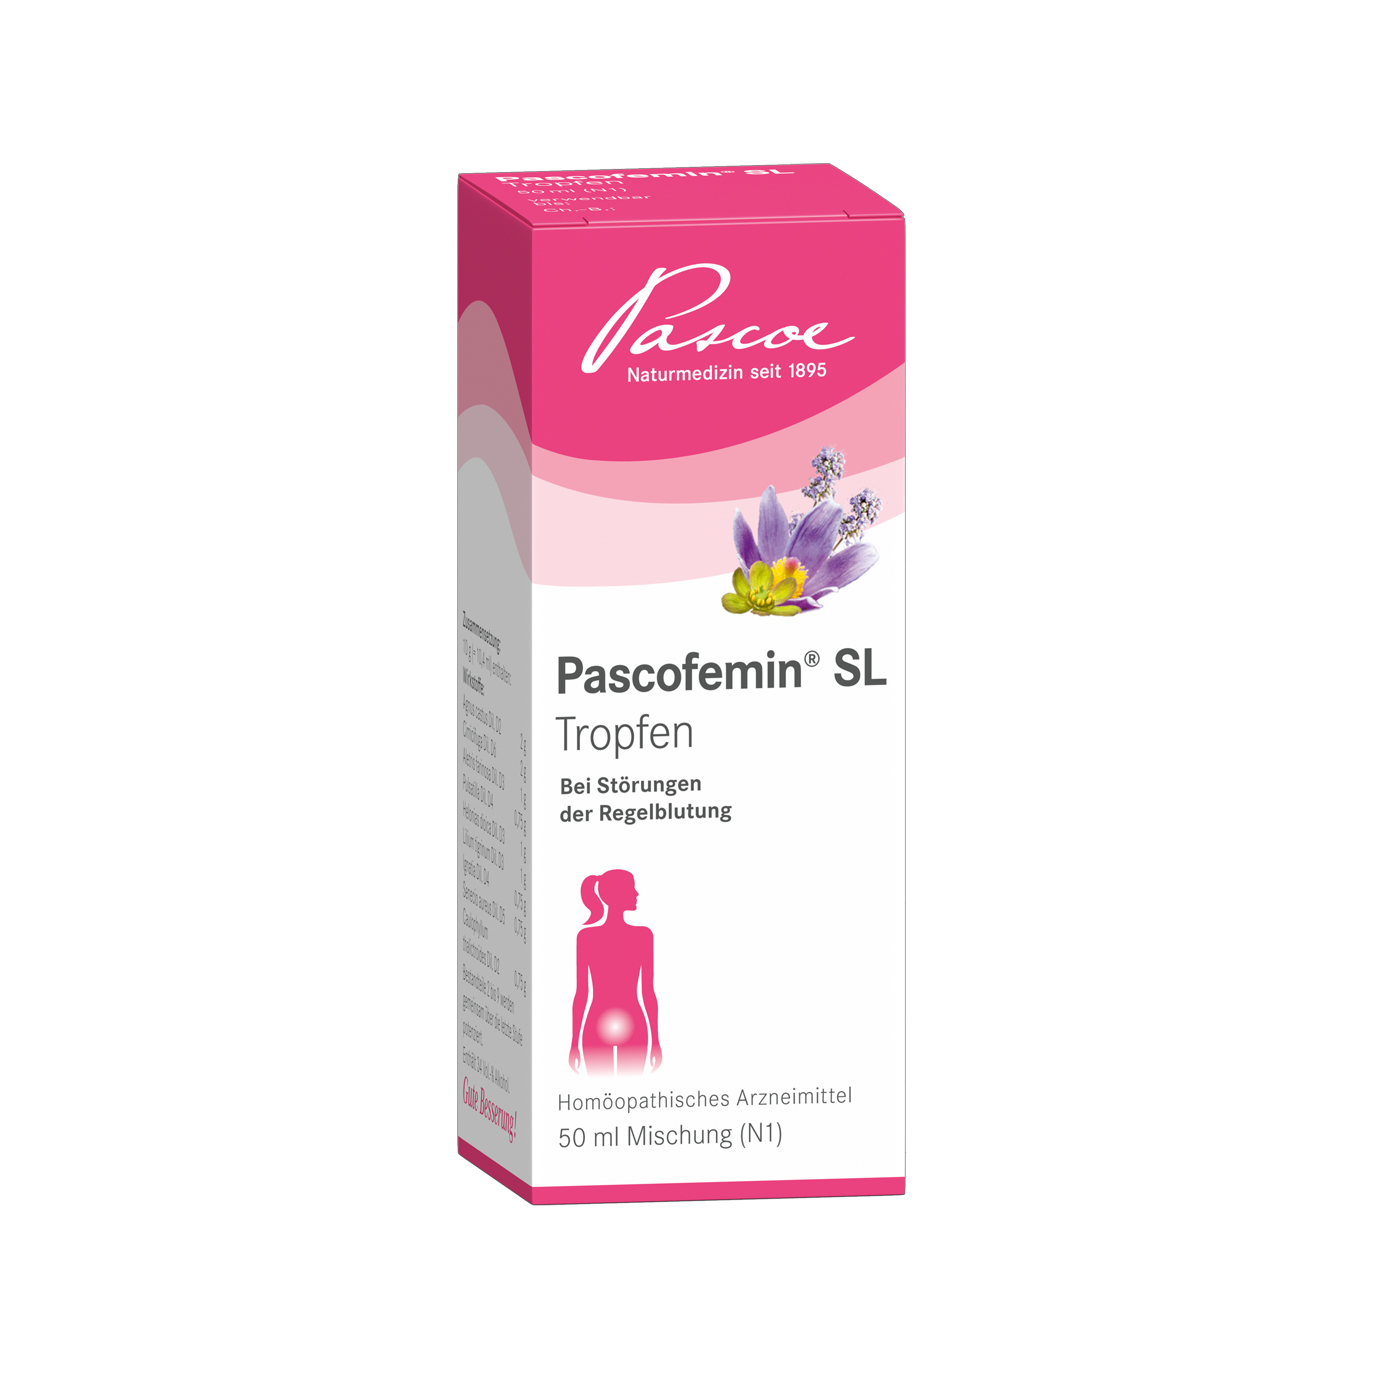 Pascofemin SL 50 ml Tropfen Packshot PZN 03692814